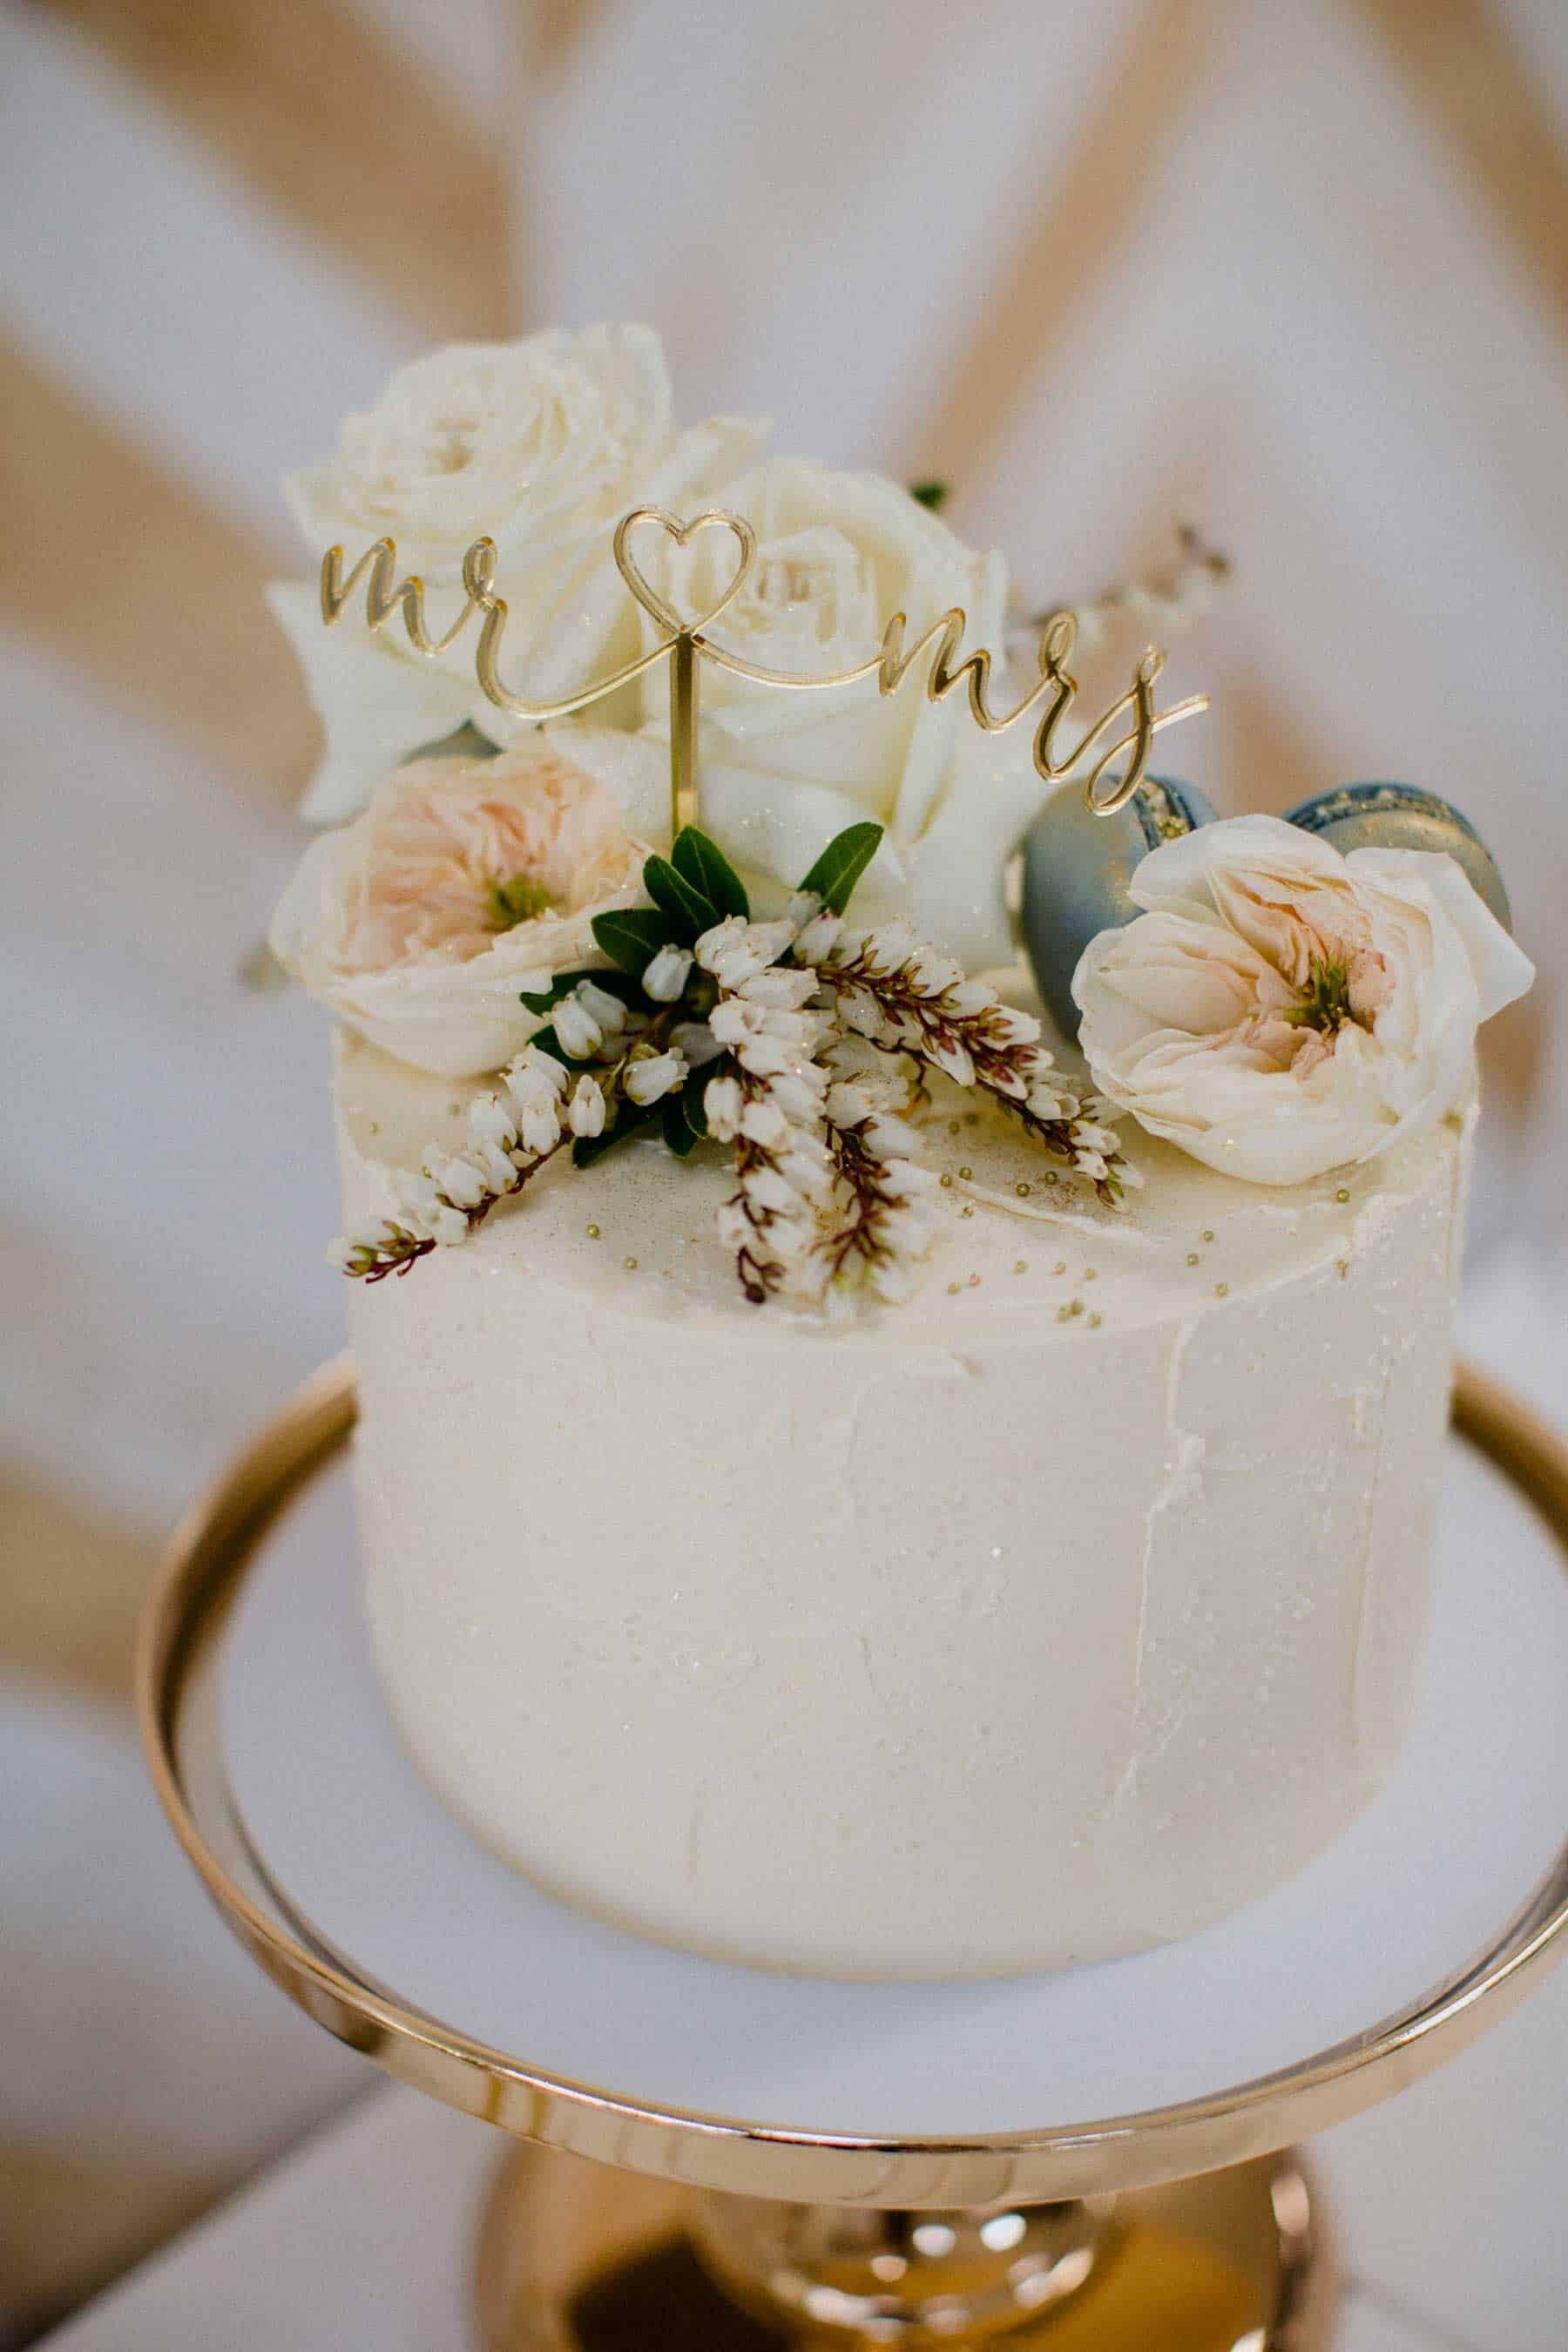 artisnal wedding cakes in Perth WA - Posh Little Cakes